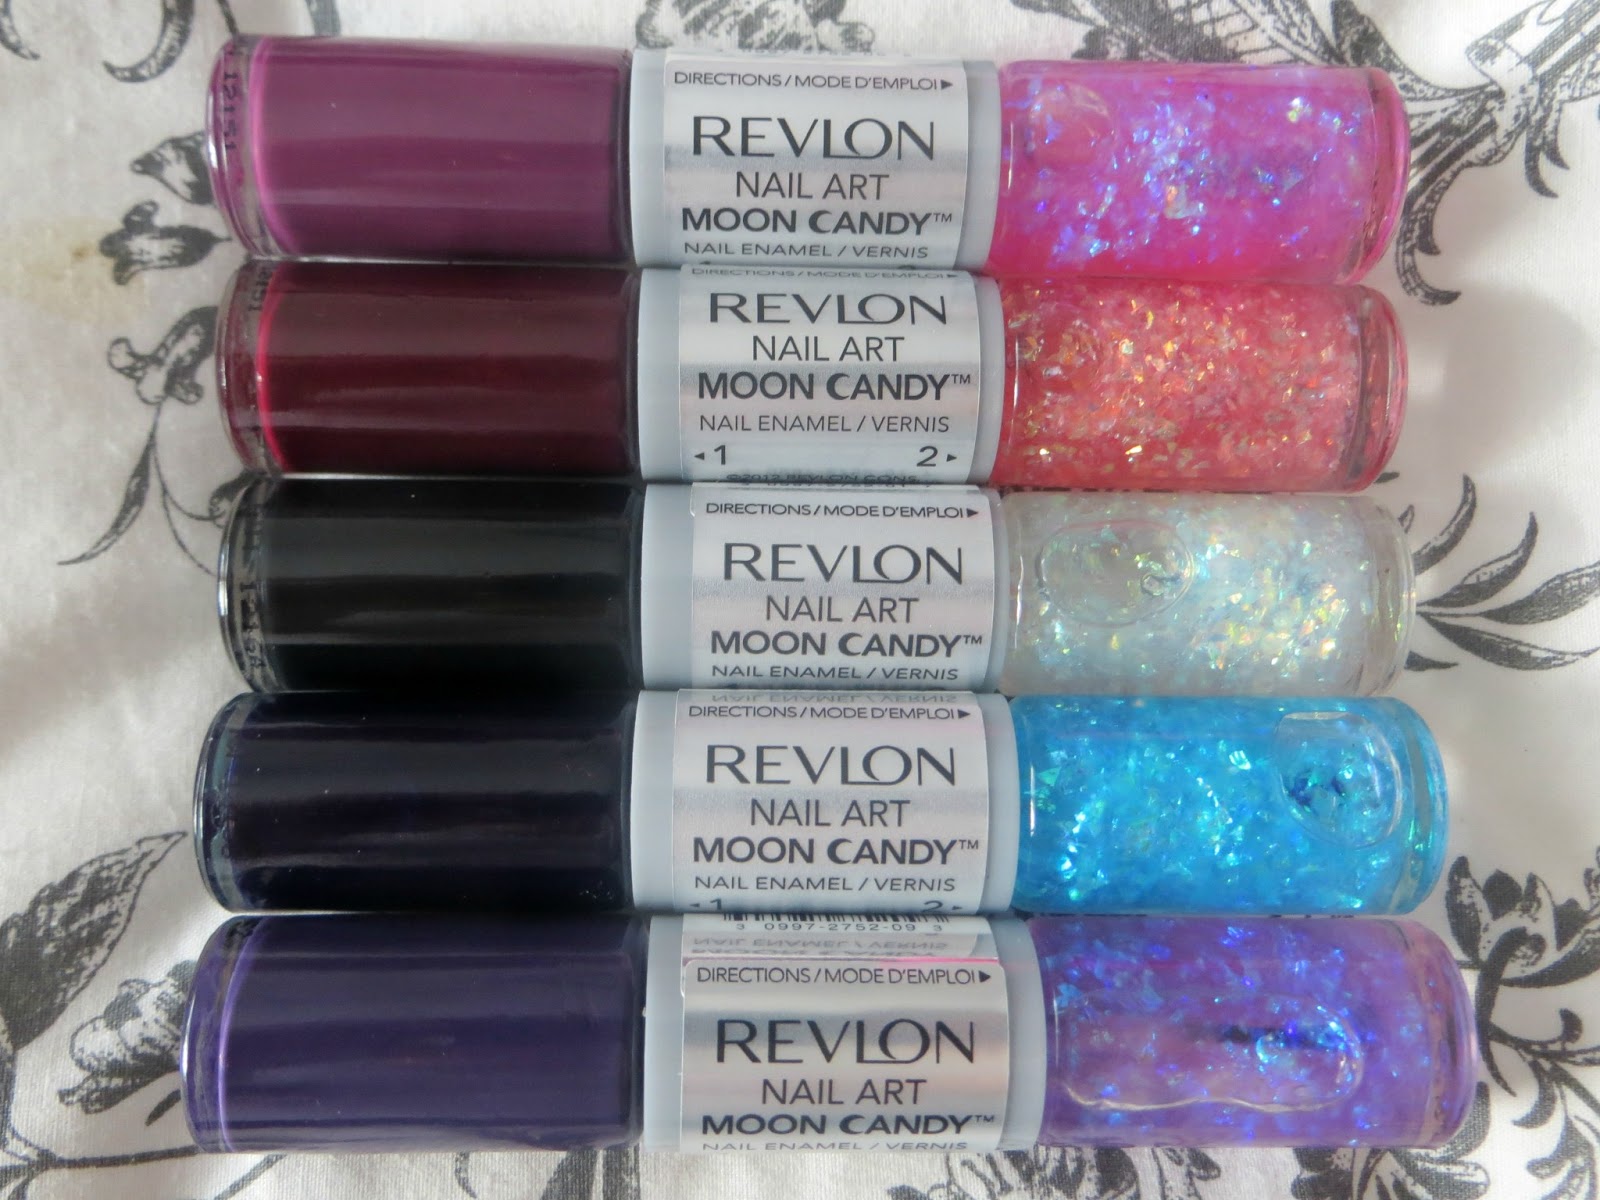 Revlon Nail Art Sun Candy Nail Enamel in Mint Color - wide 6